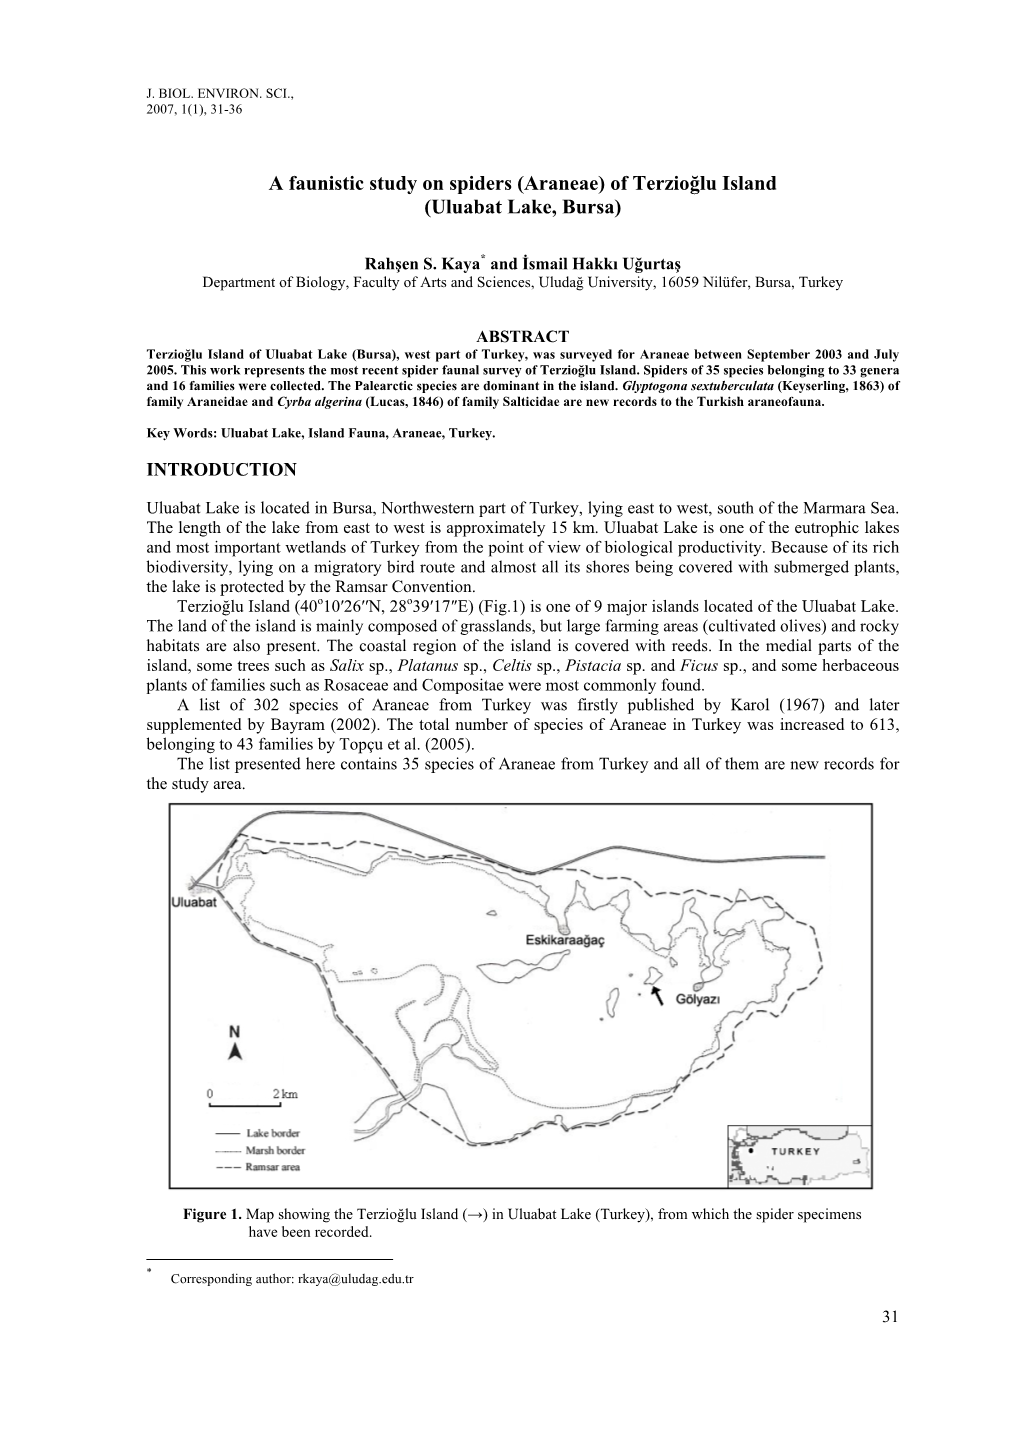 A Faunistic Study on Spiders (Araneae) of Terzioğlu Island (Uluabat Lake, Bursa)